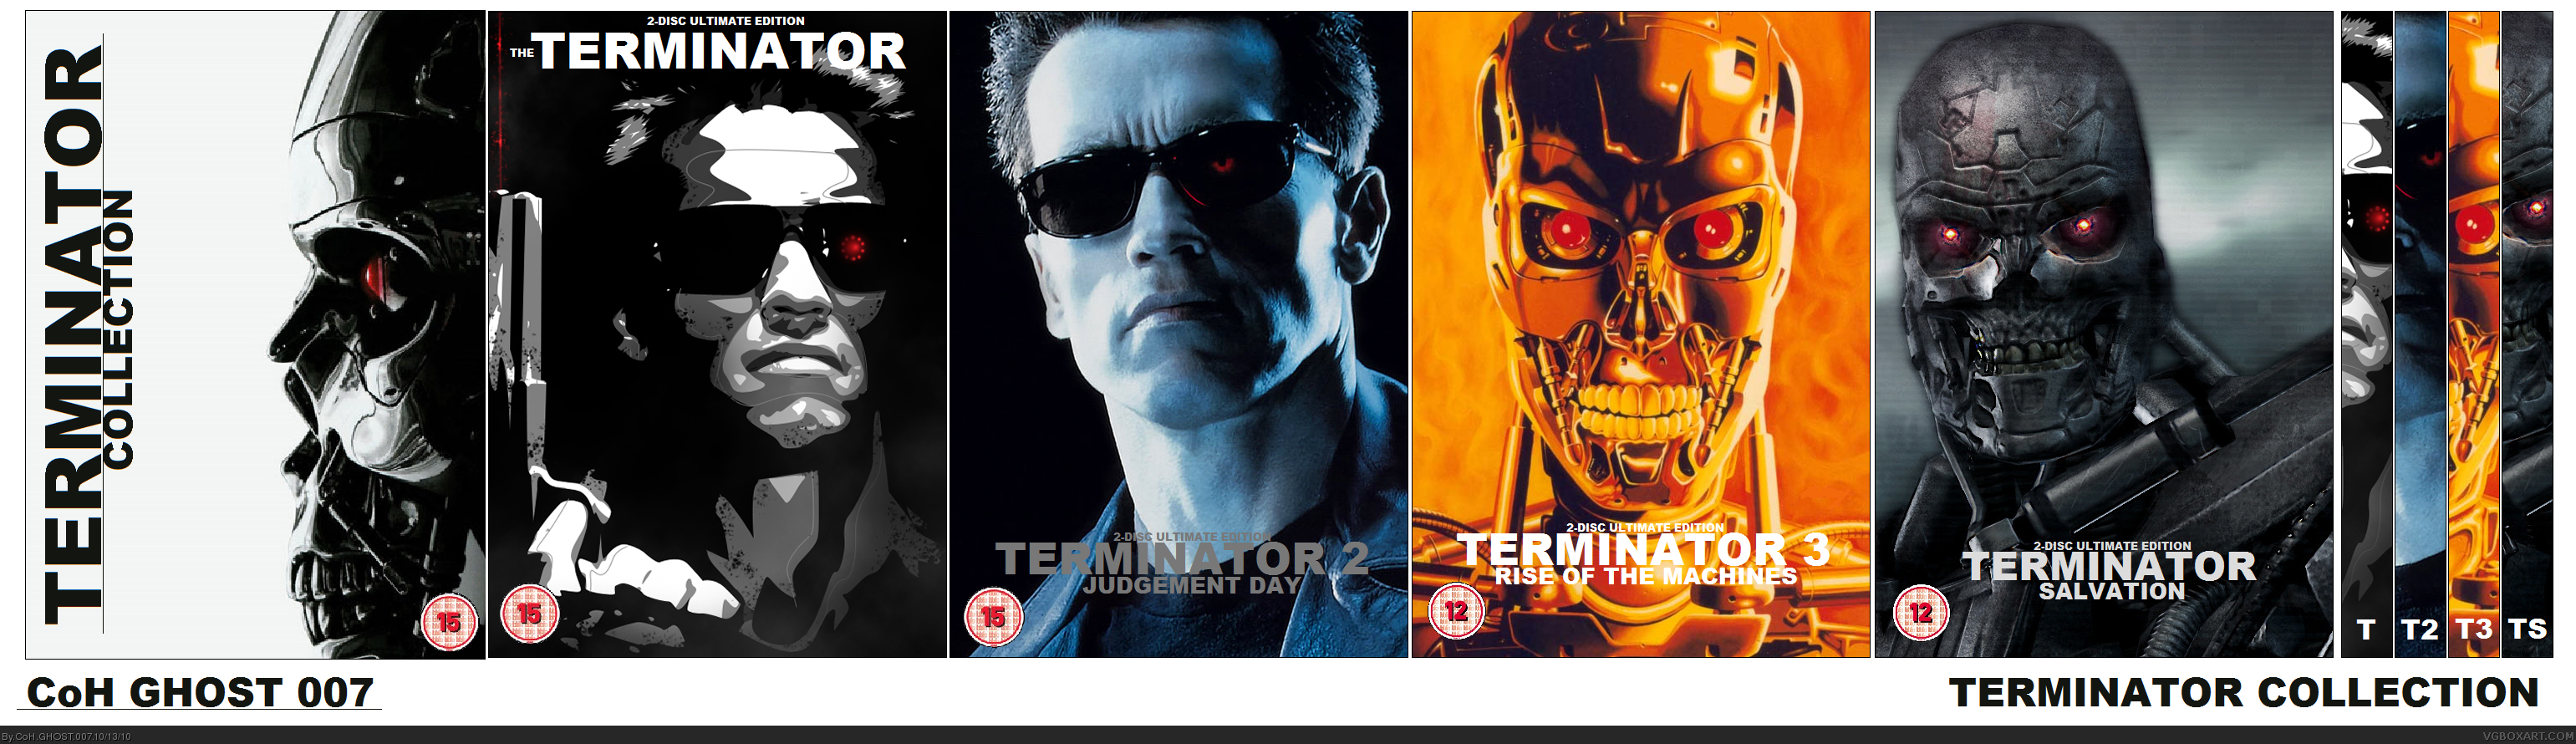 Terminator: Collection box cover